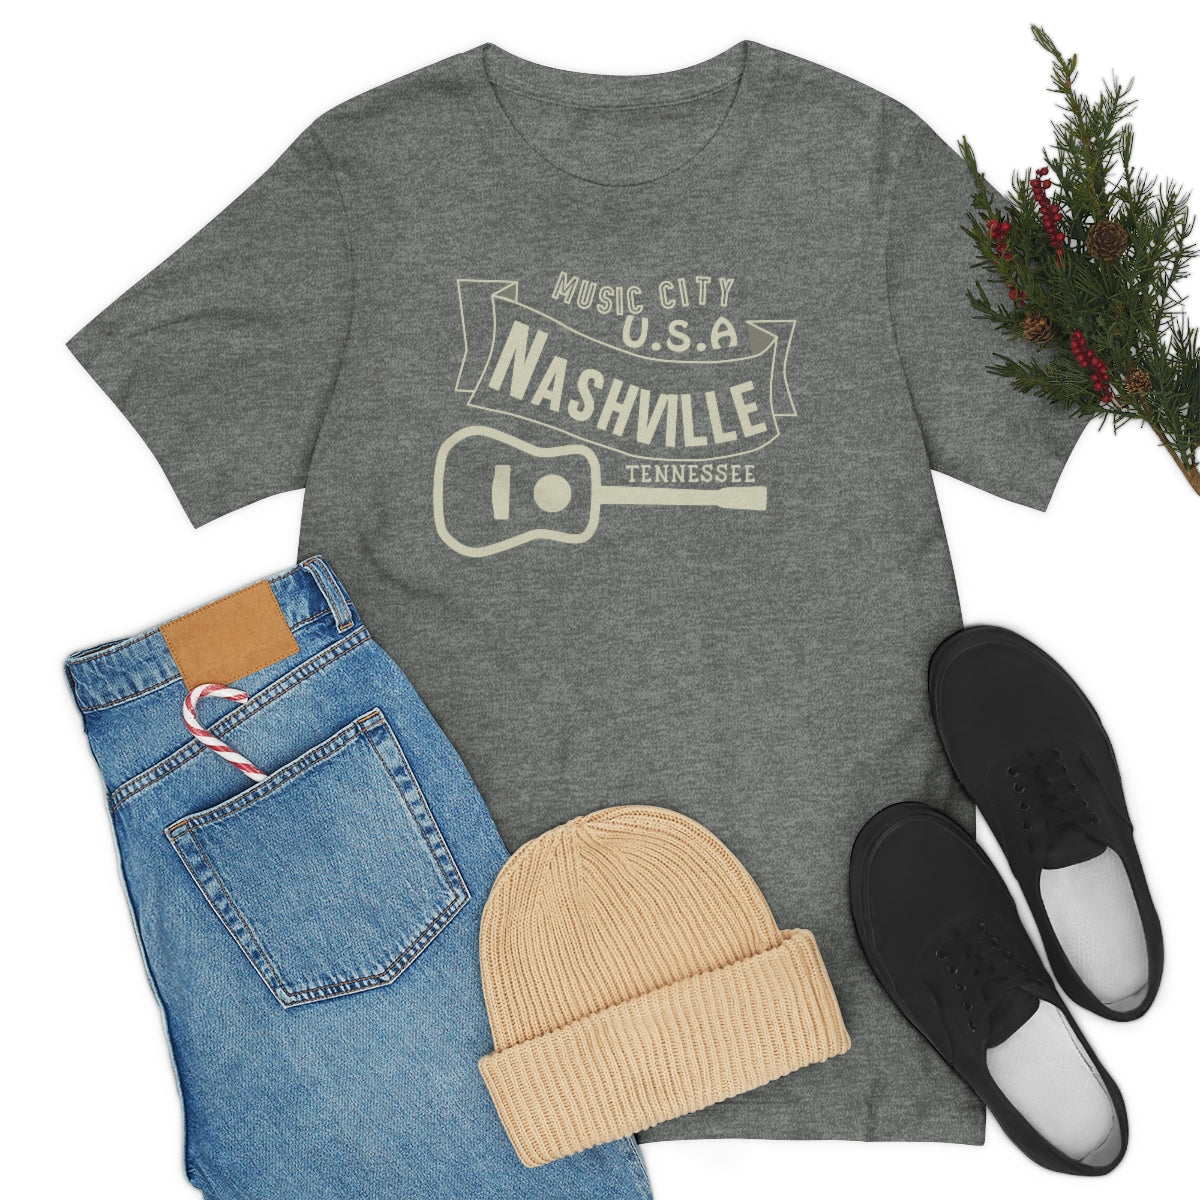 Nashville TN Banner Tshirt